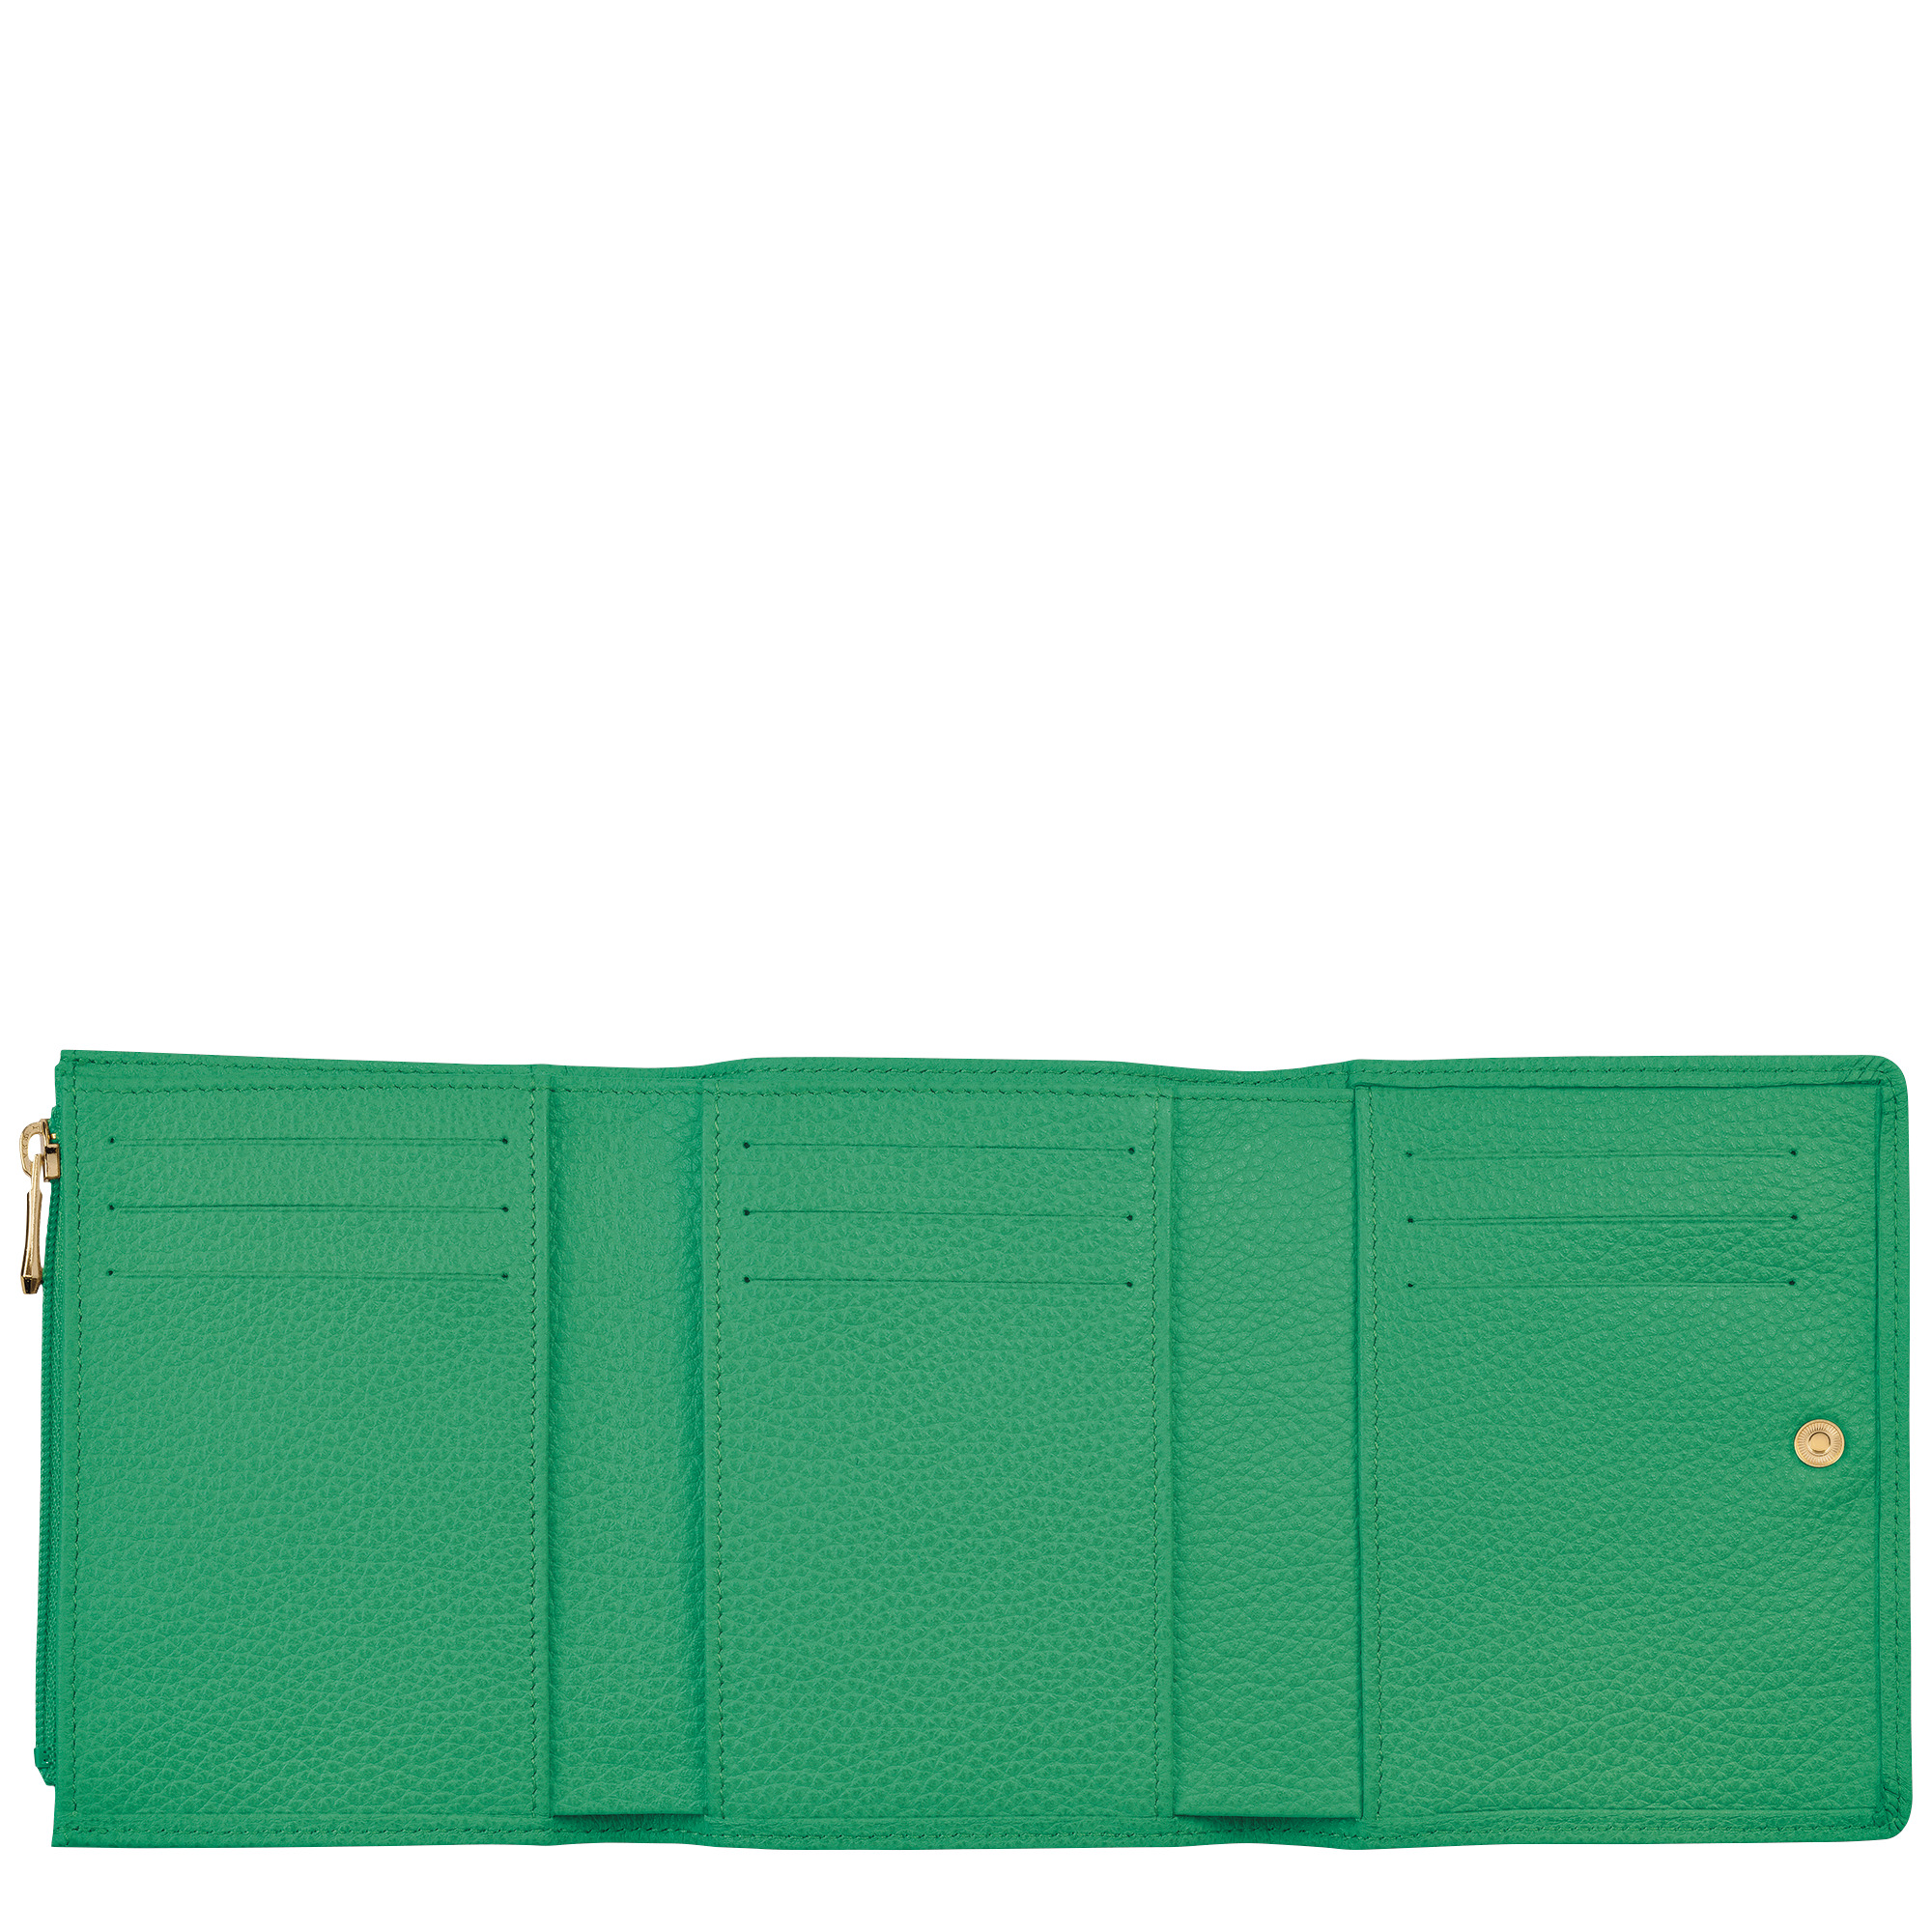 Le Foulonné Wallet Green - Leather - 2